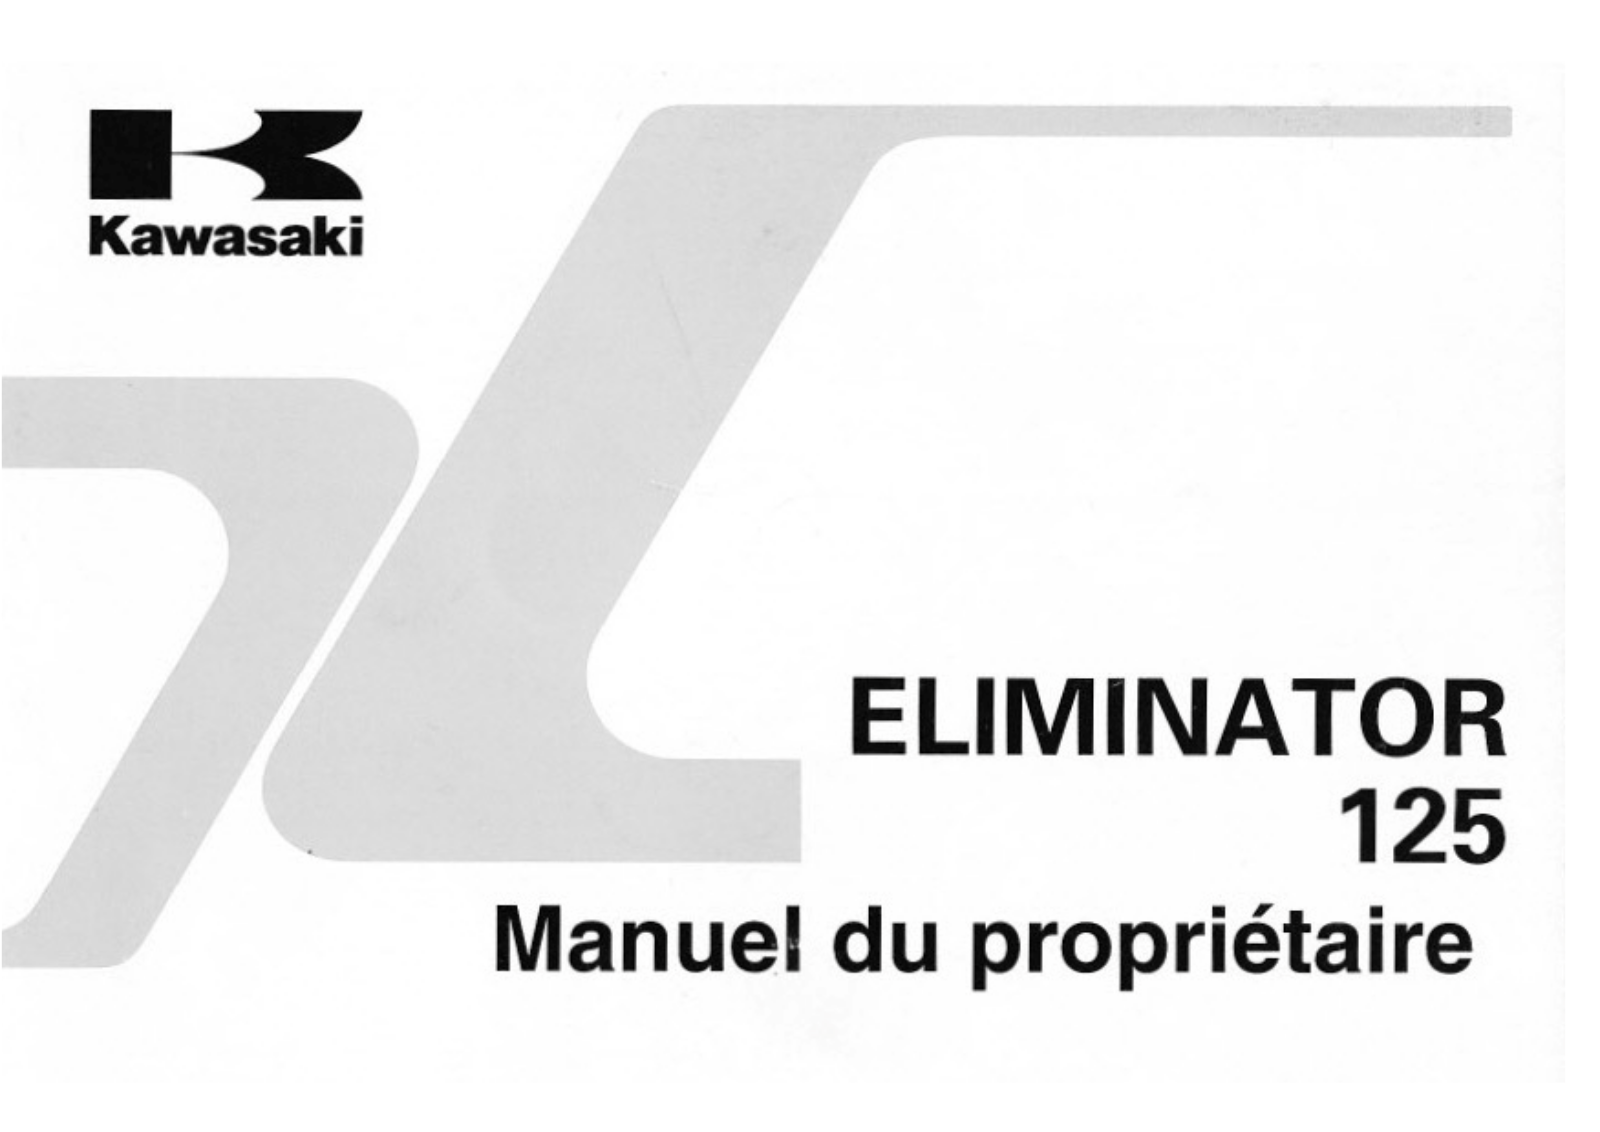 KAWASAKI ELIMINATOR 125 User Manual